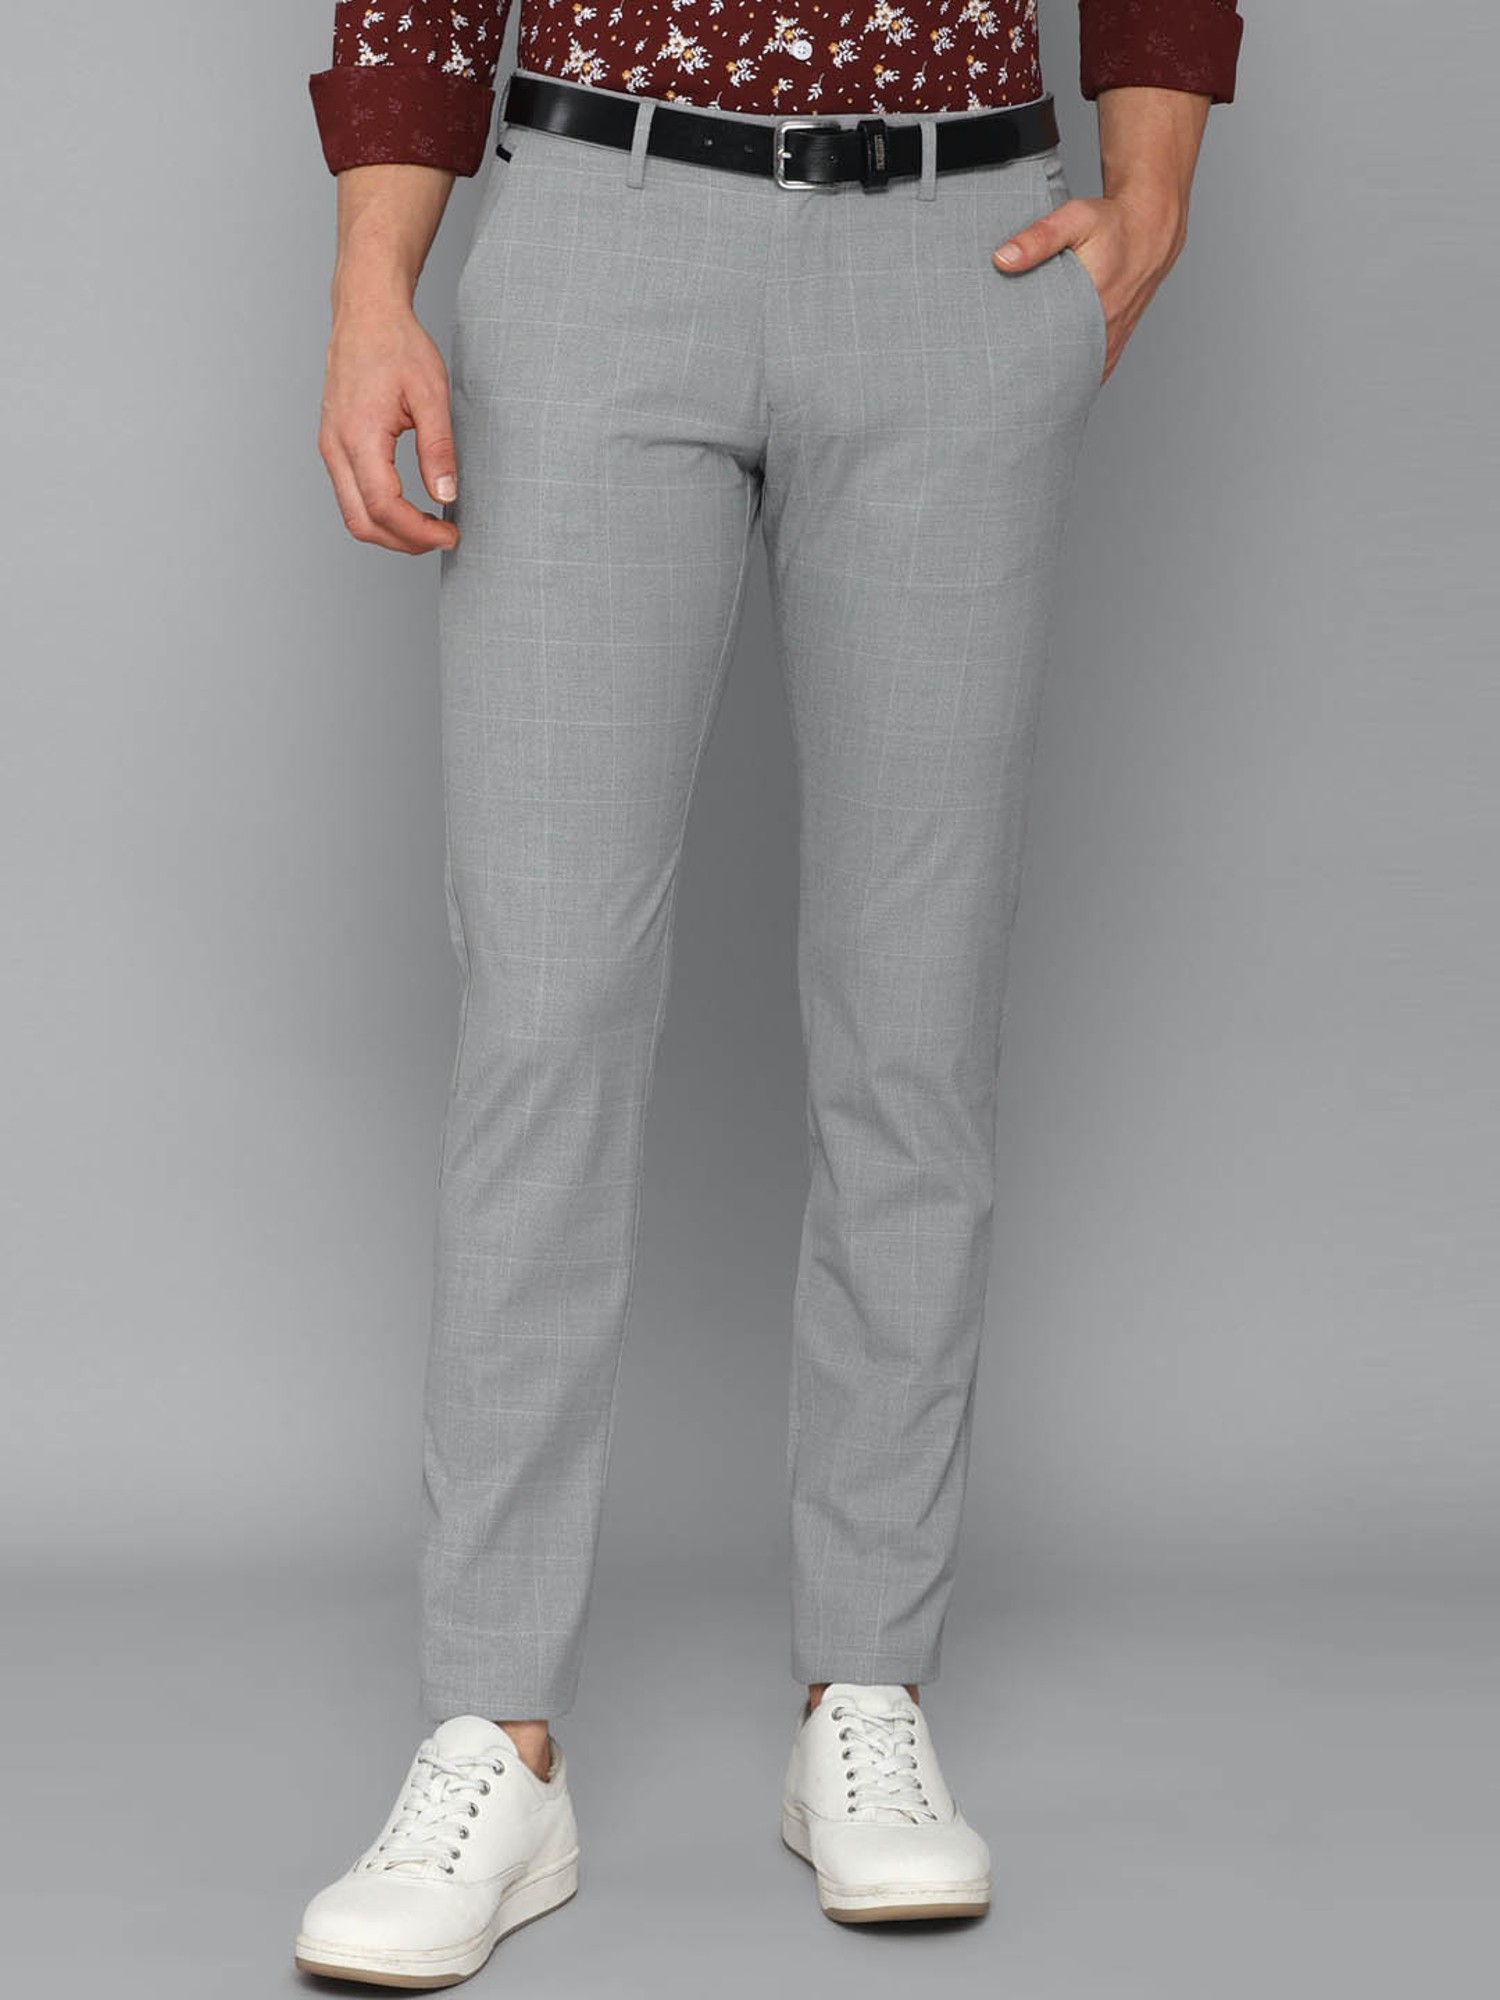 Buy Allen Solly Men's Slim Fit Casual Pants (ASTFMSRF099456_Grey_34) at  Amazon.in